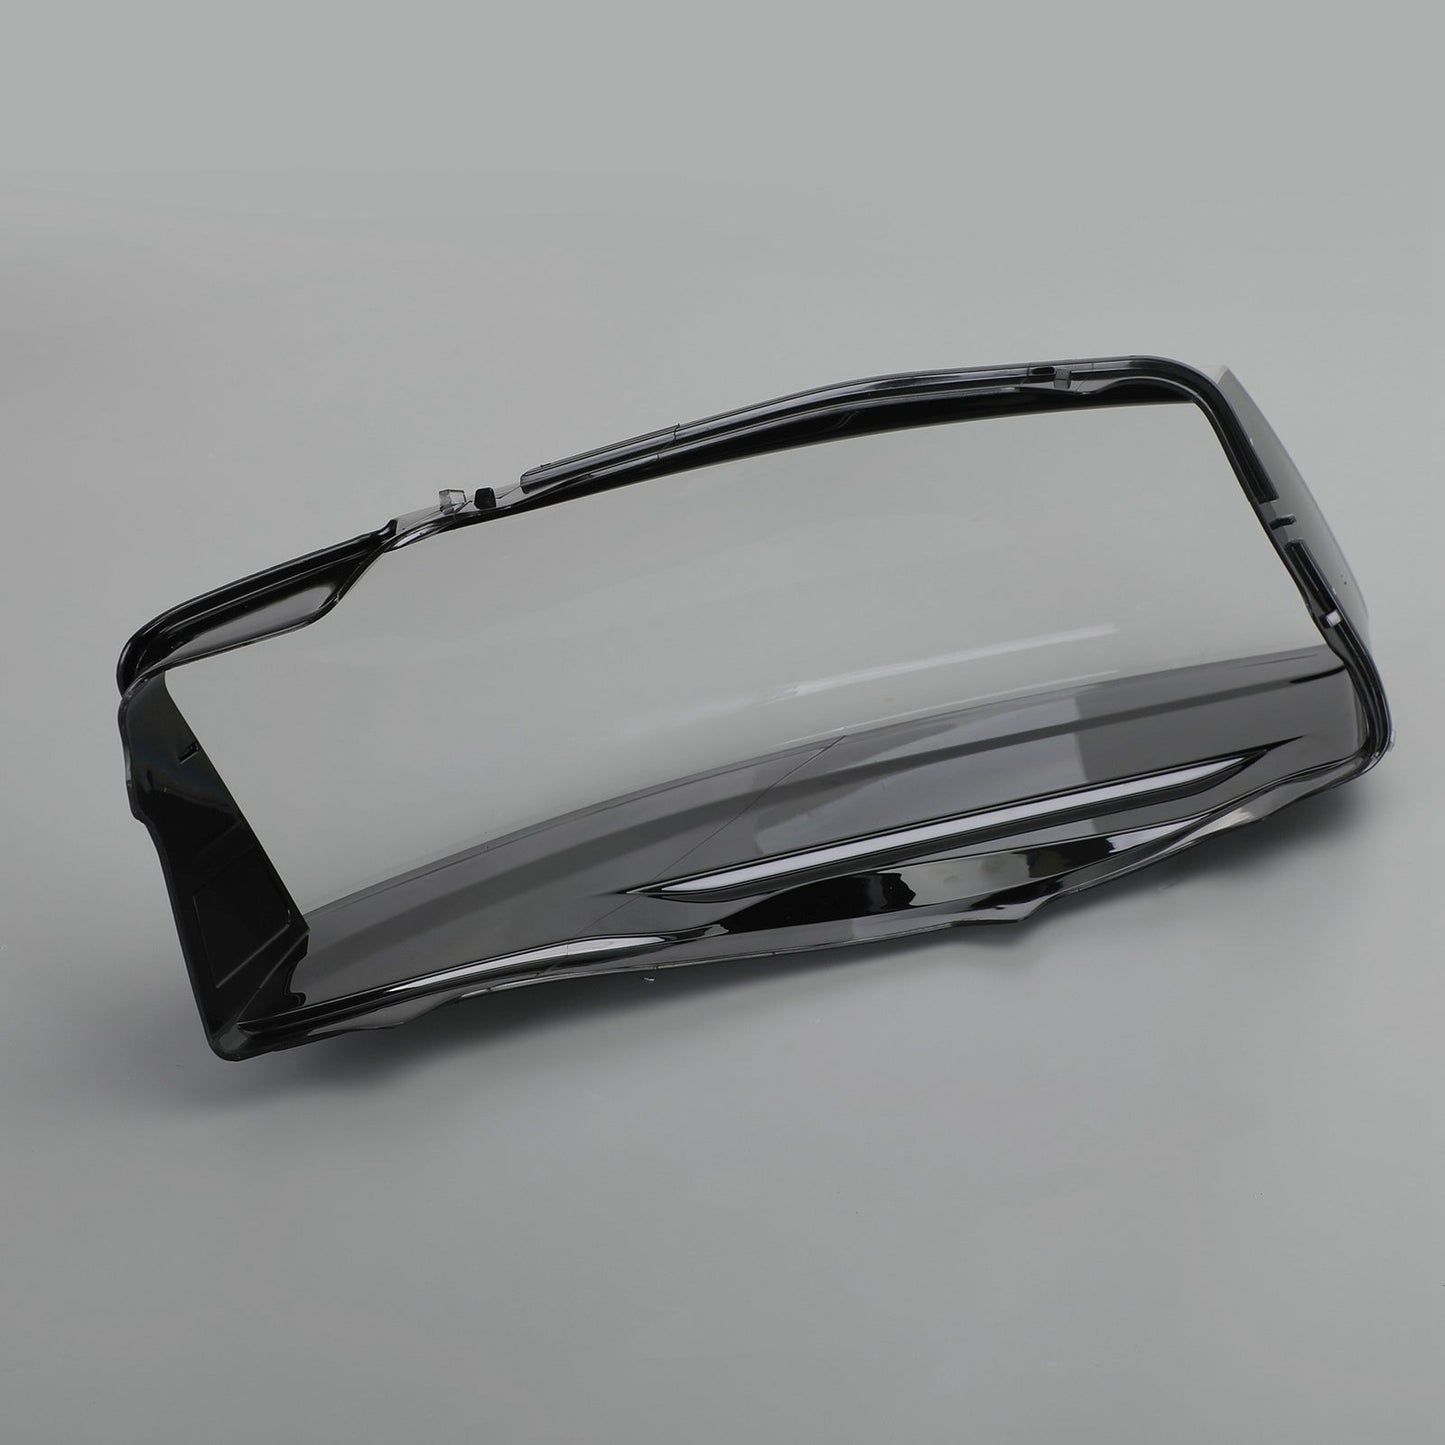 Left +Right Headlight Lens Plastic Cover Shell 8T0941029/30 For Audi A5 08-2011